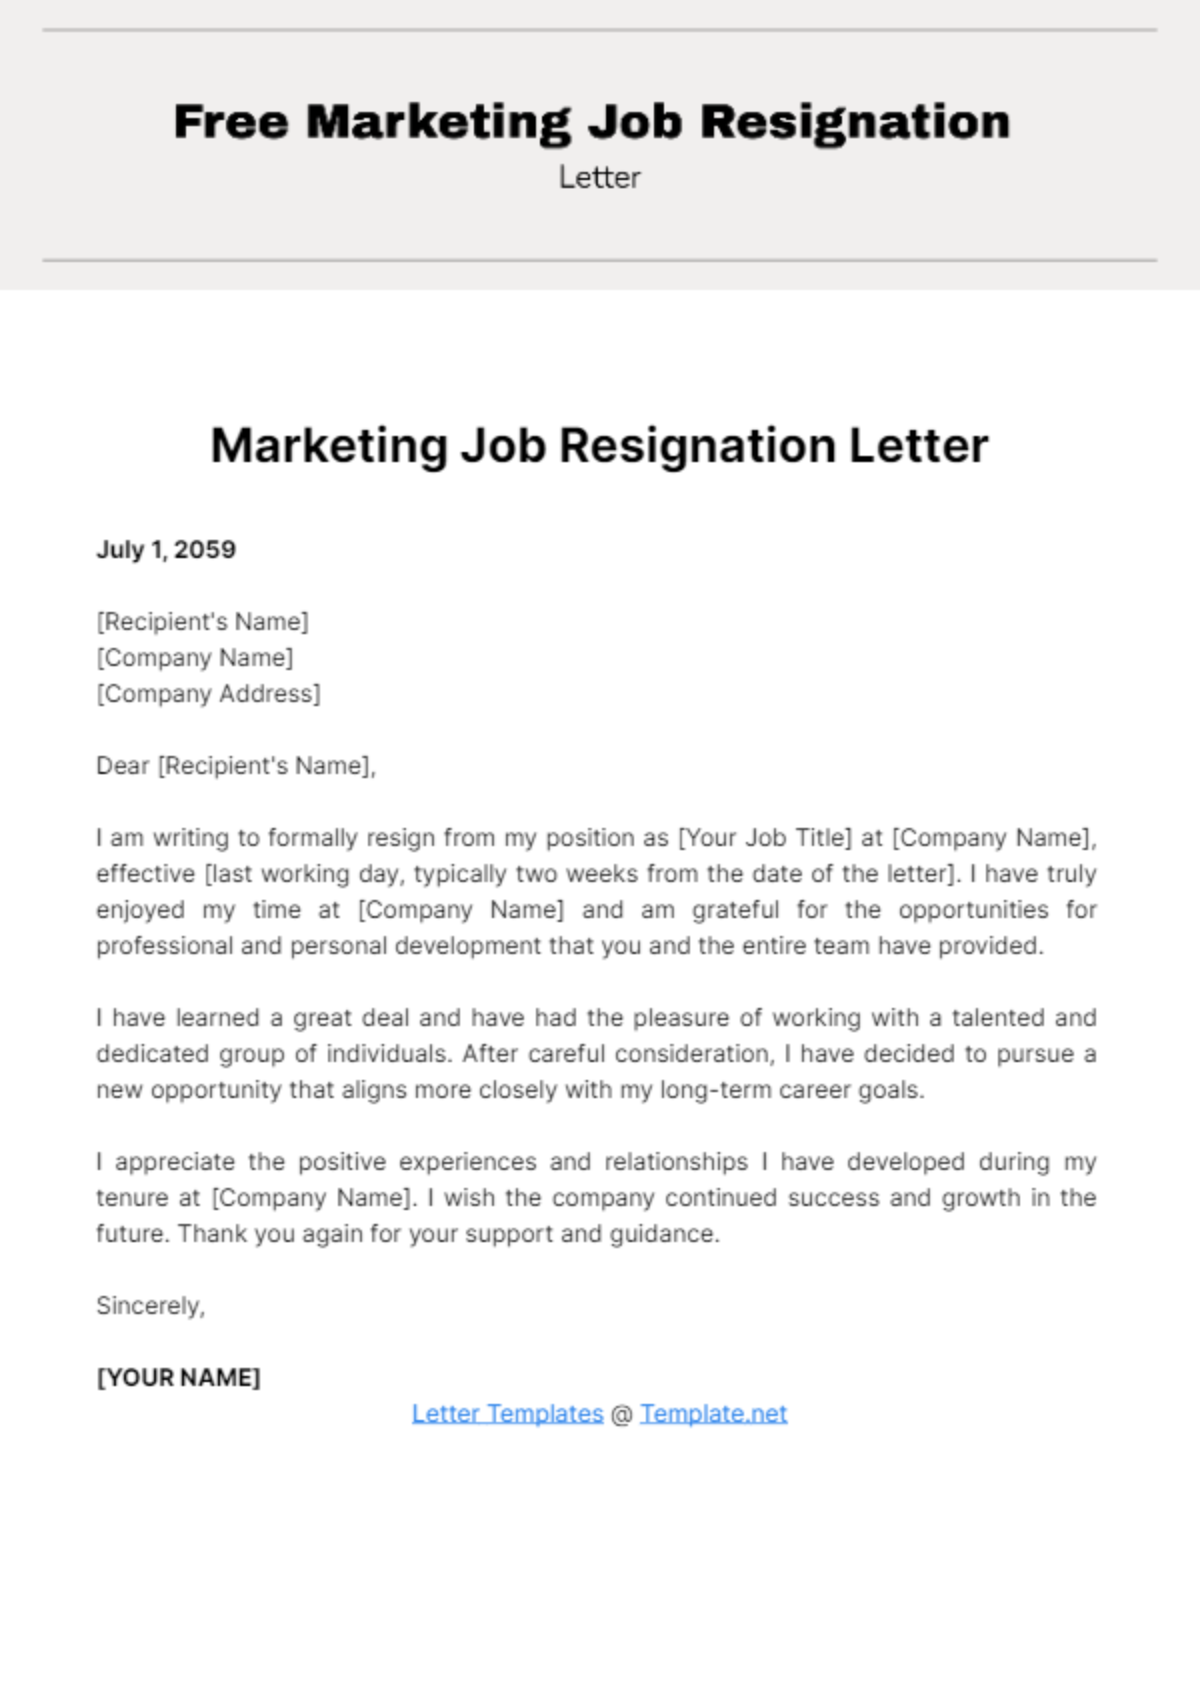 Marketing Job Resignation Letter Template